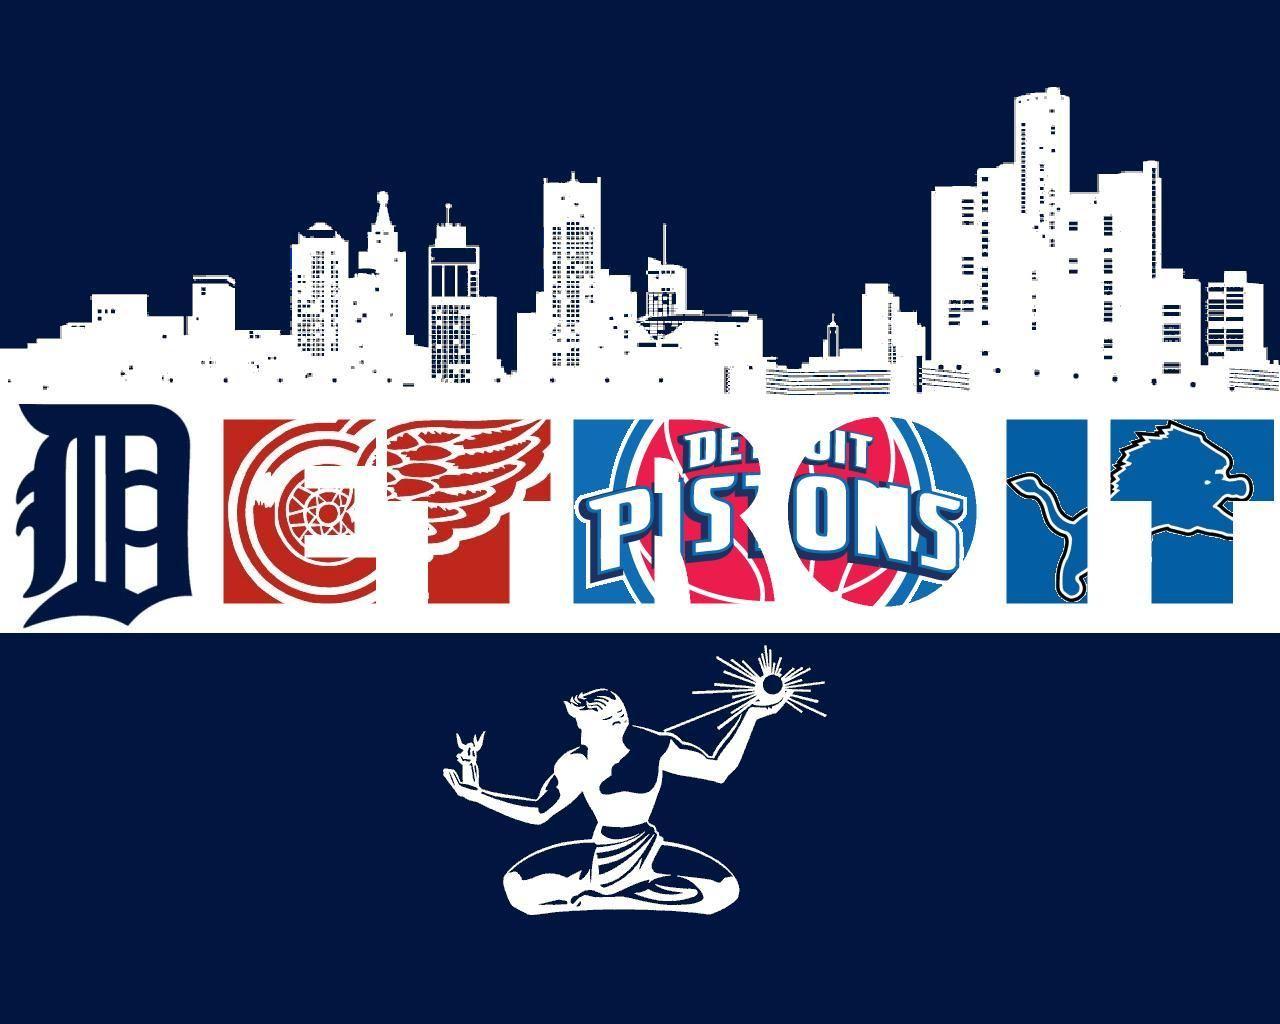 Detroit Pistons Wallpaper, Cool Detroit Pistons Background